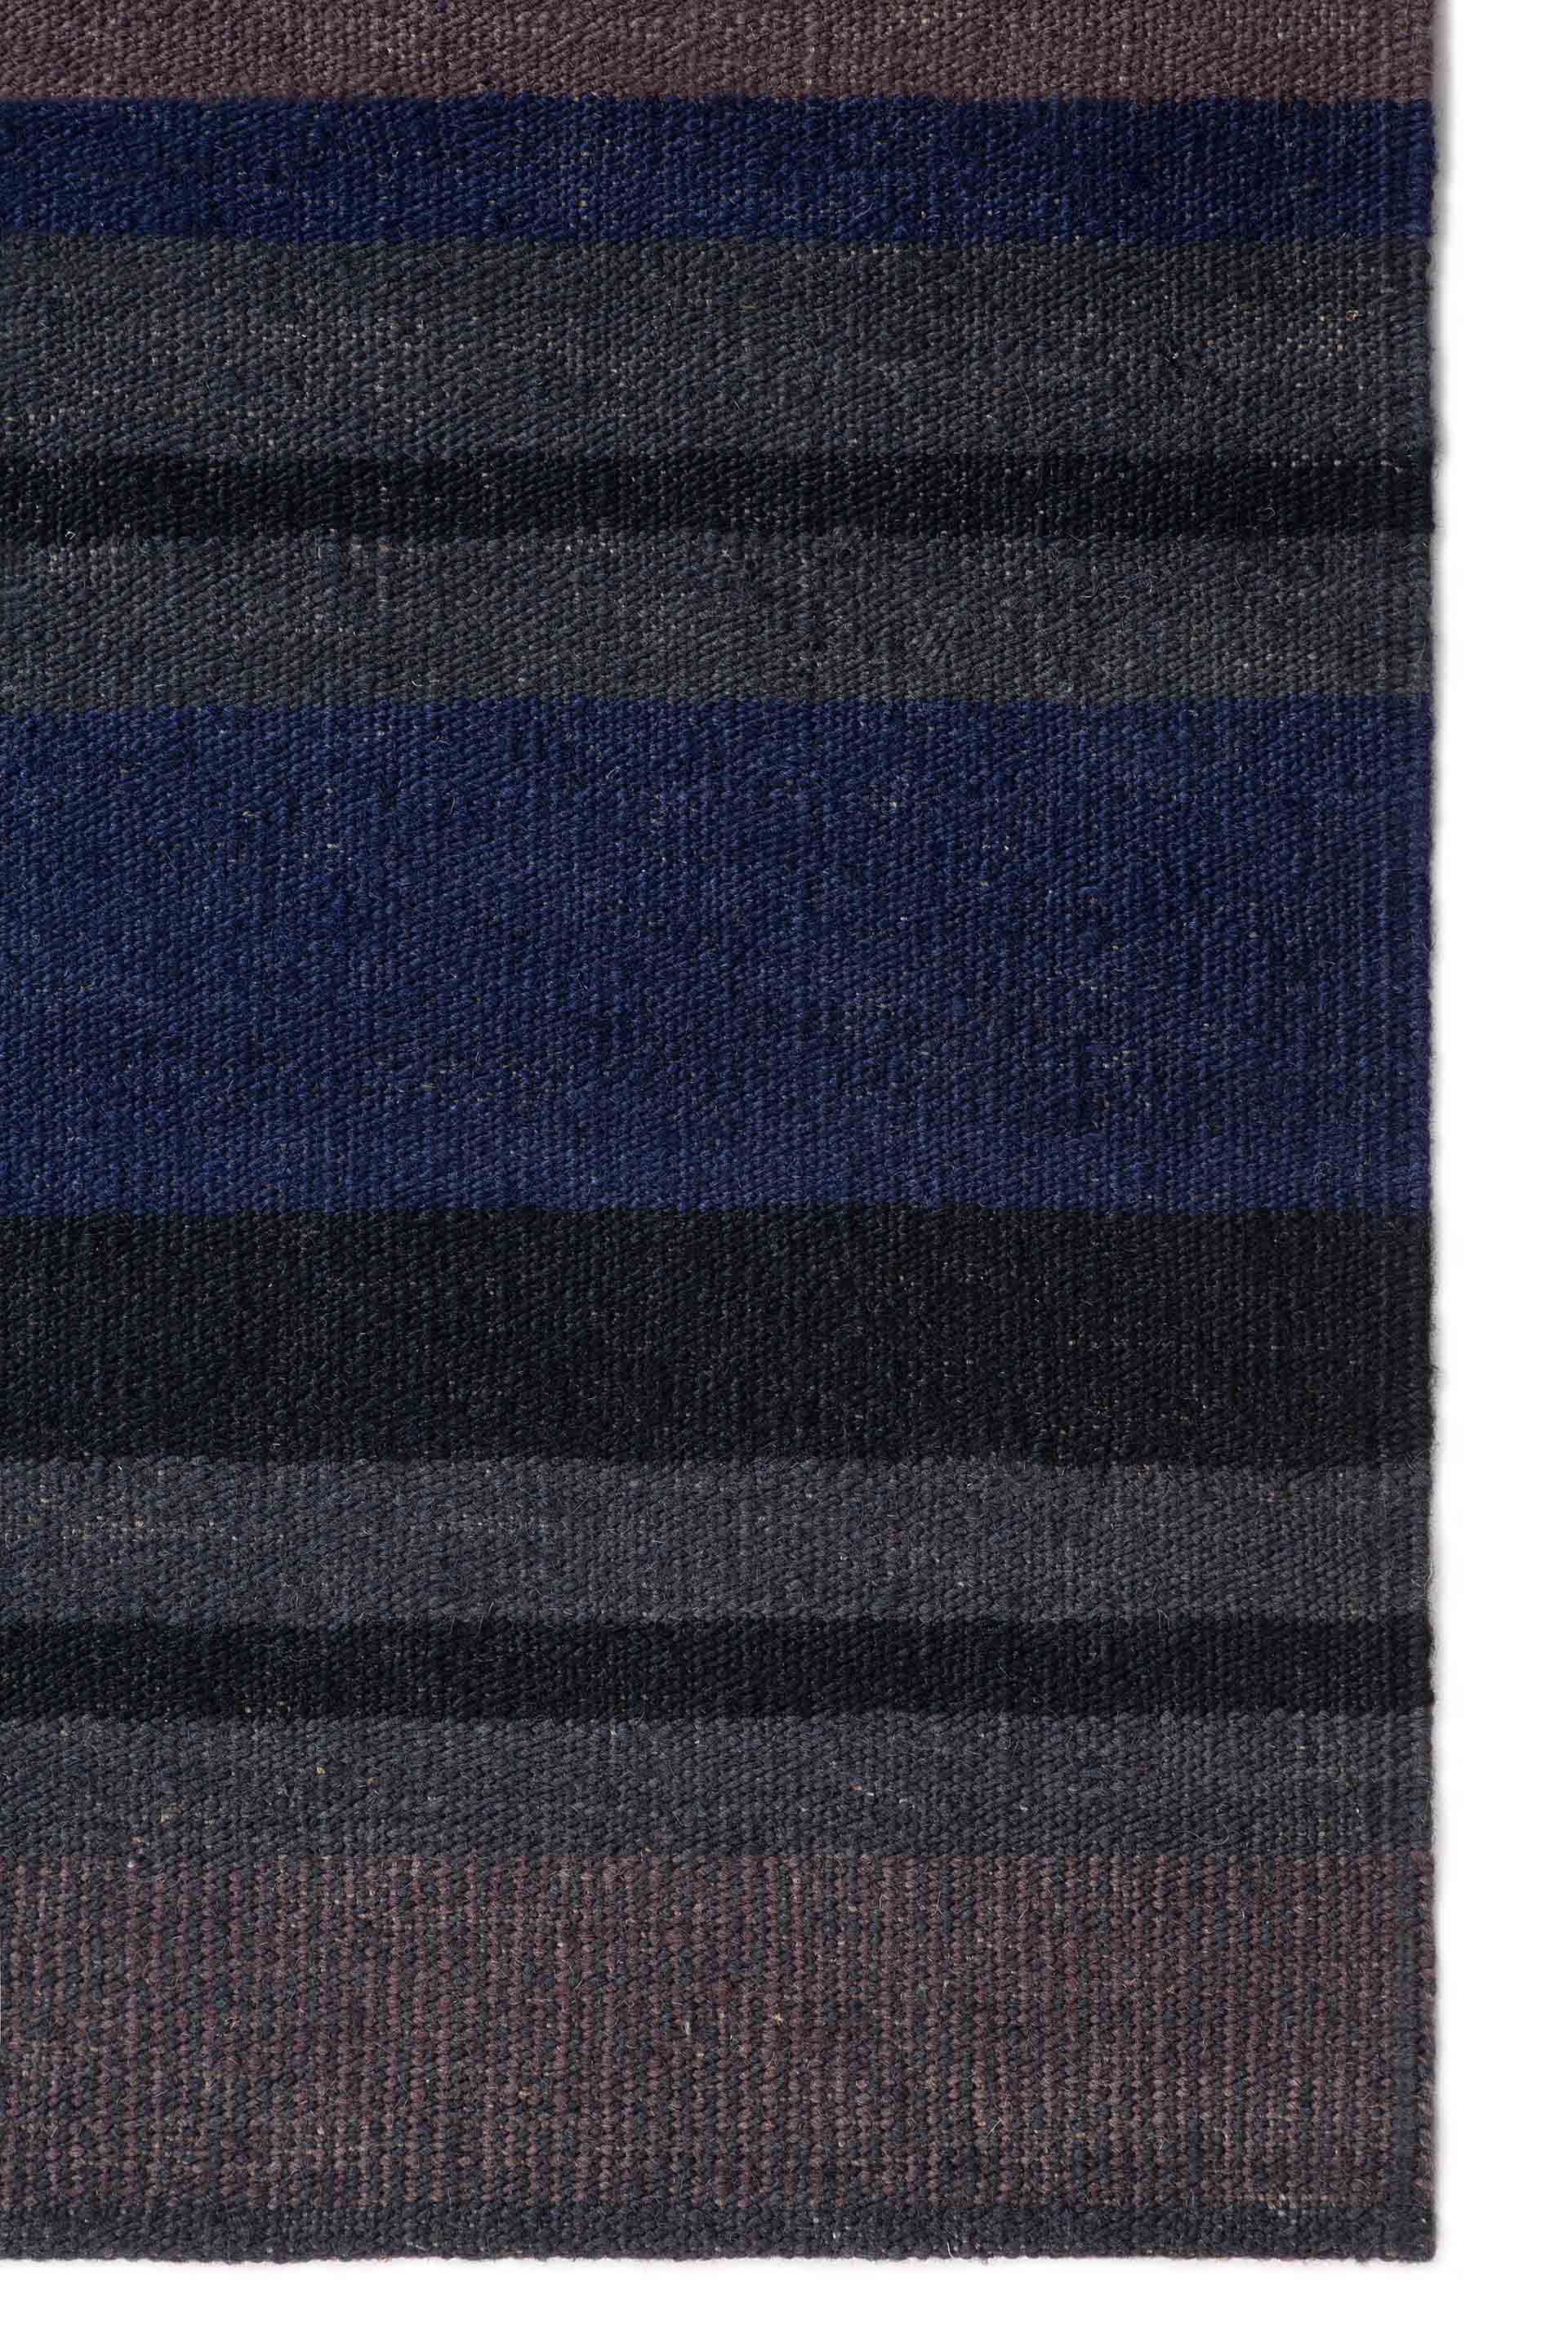 Ethnicraft - Cobalt kilim tapijt (200 x 300 x 1 cm)